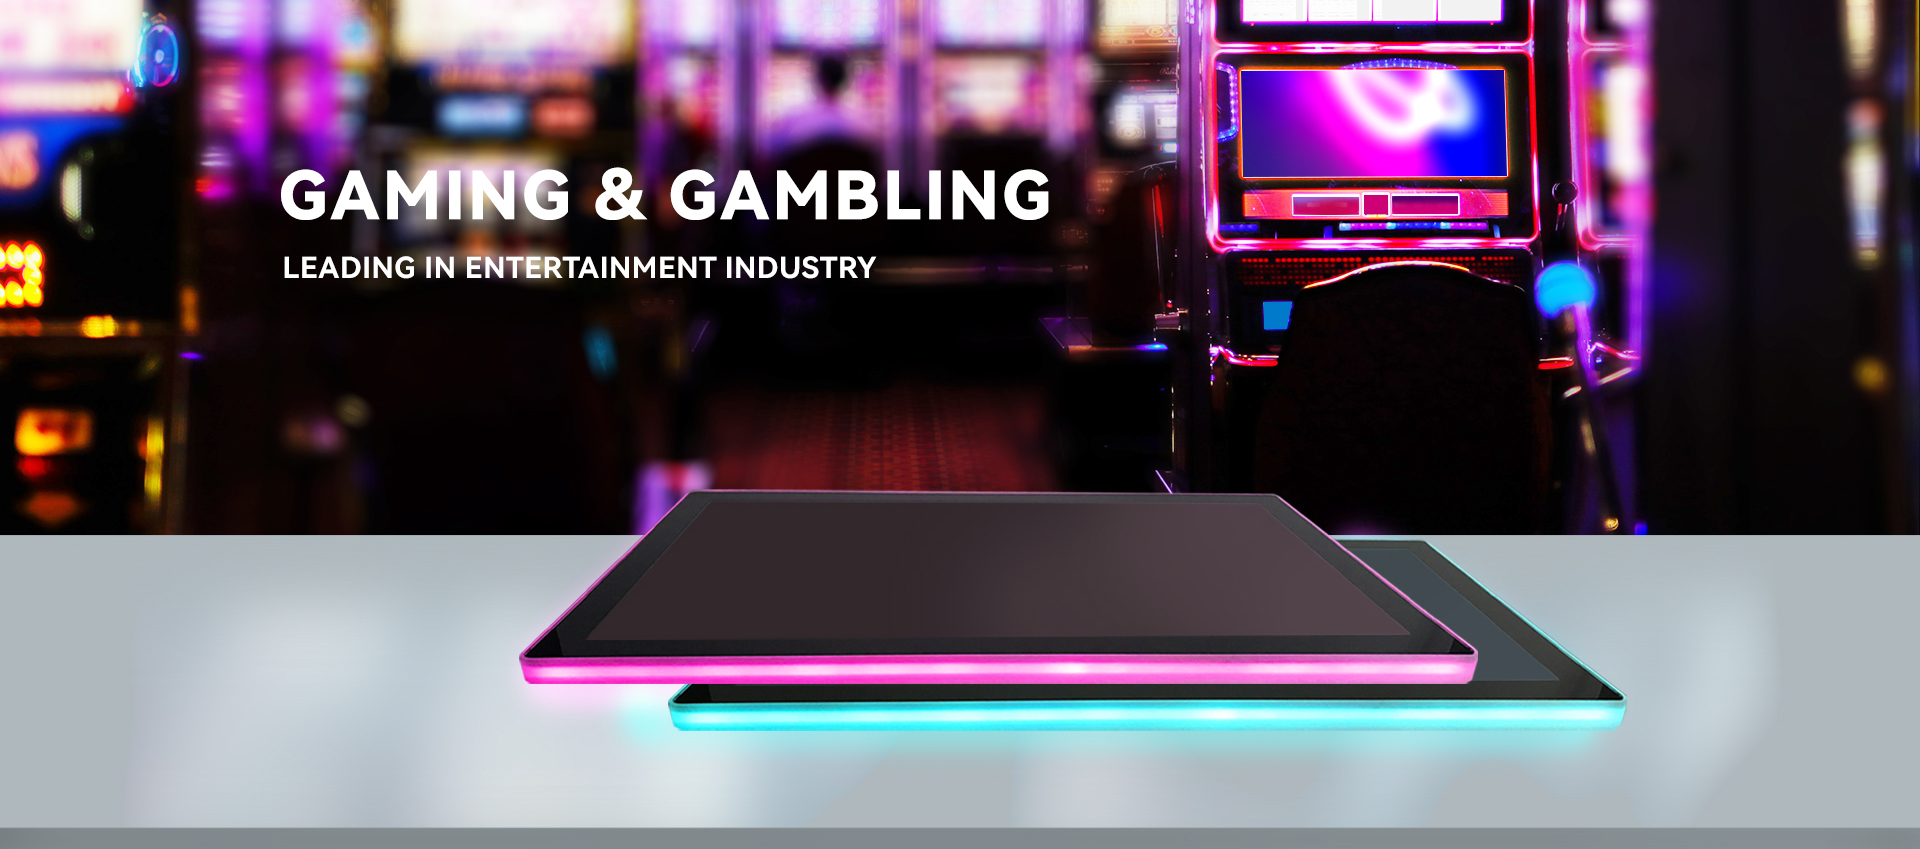 daws-Gaming-&-Gambling_02